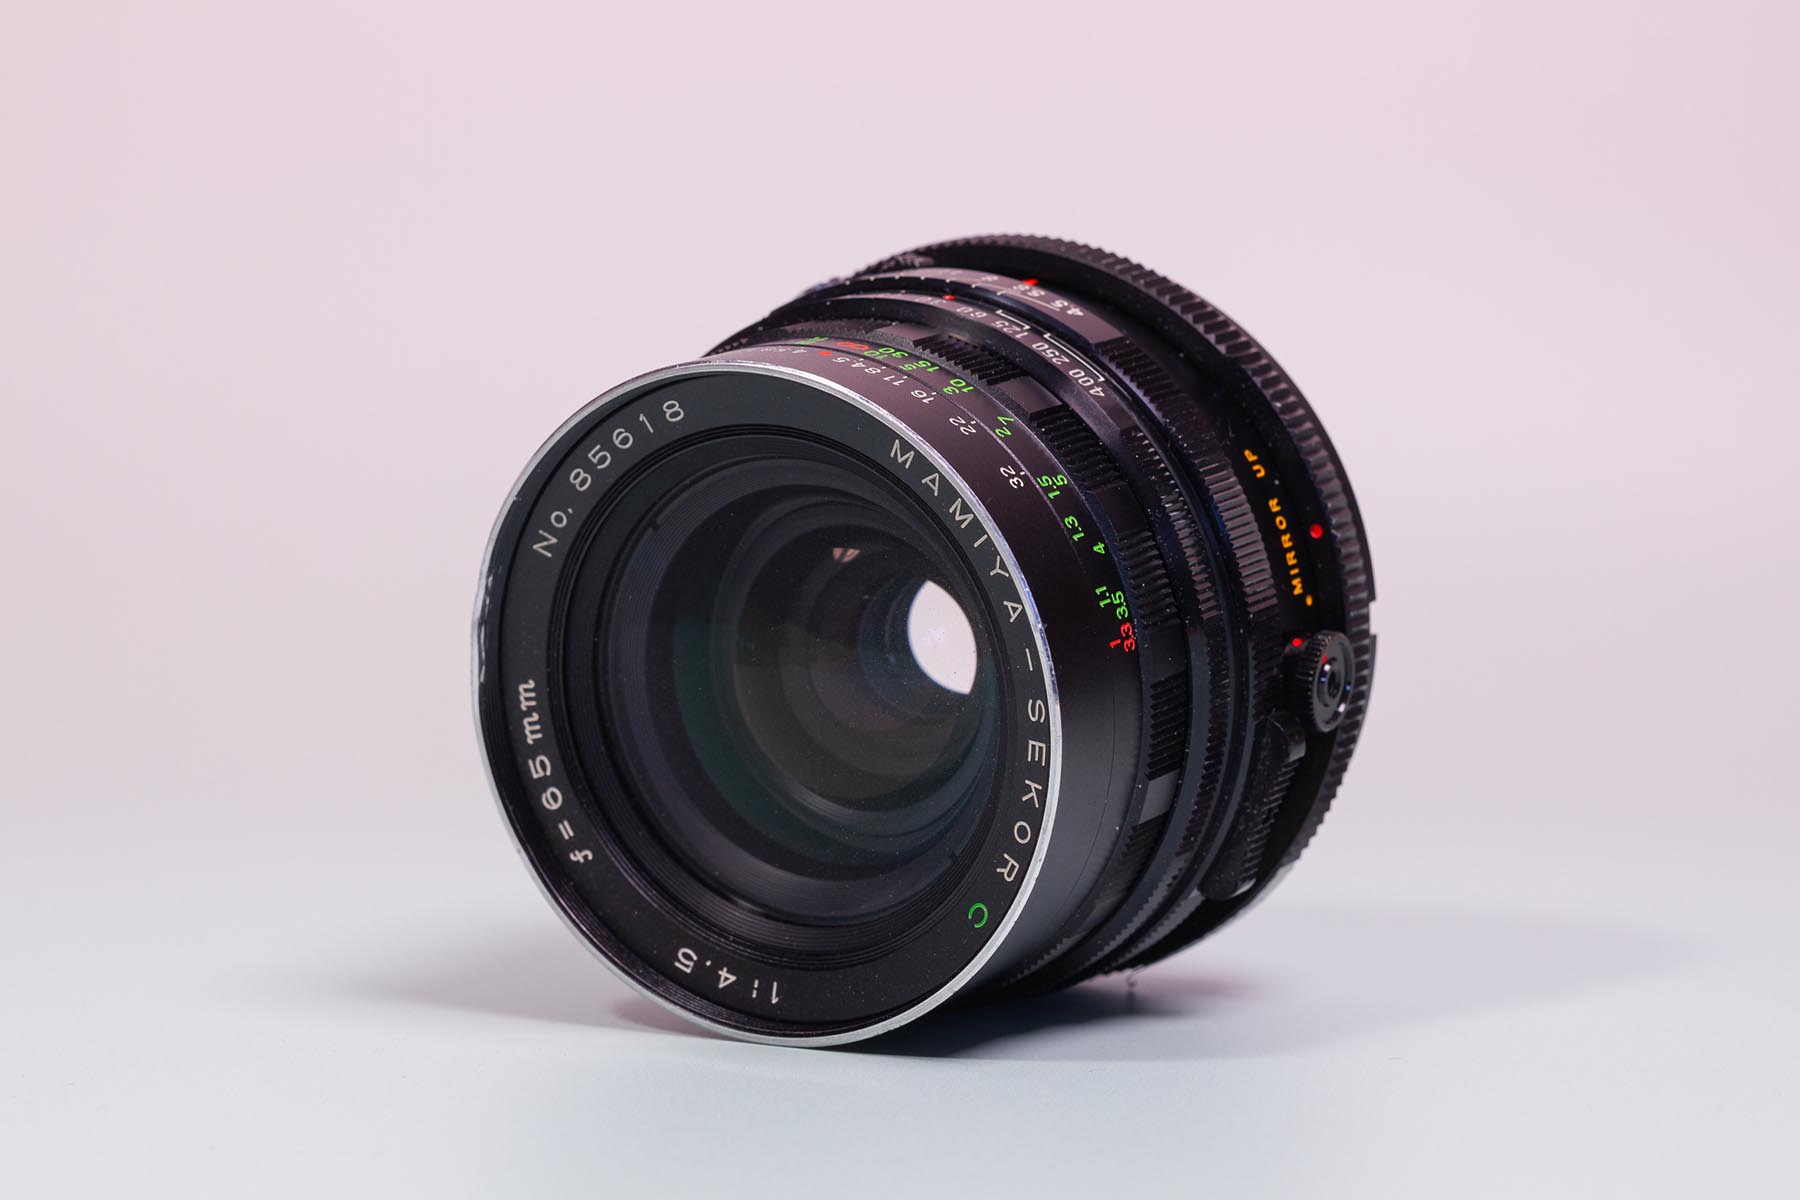 Mamiya RB67 Sekor C 65mm f4.5 lens